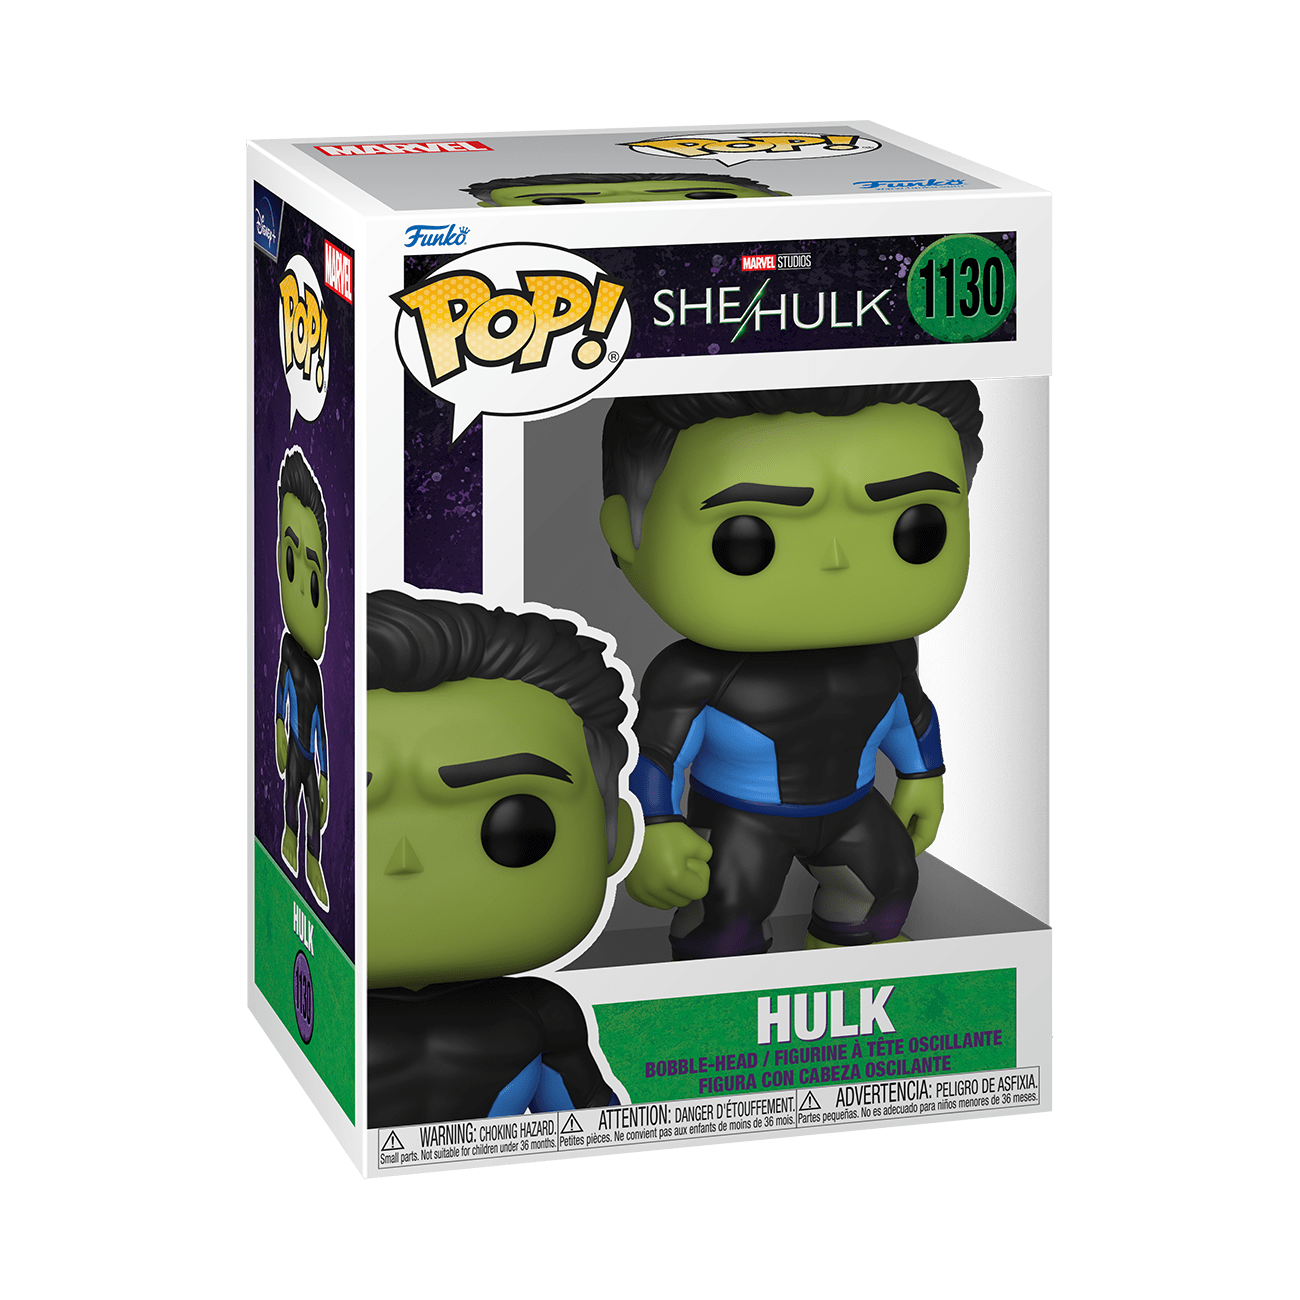 Funko Marvel Studios She-Hulk Hulk Pop! Vinyl Figure